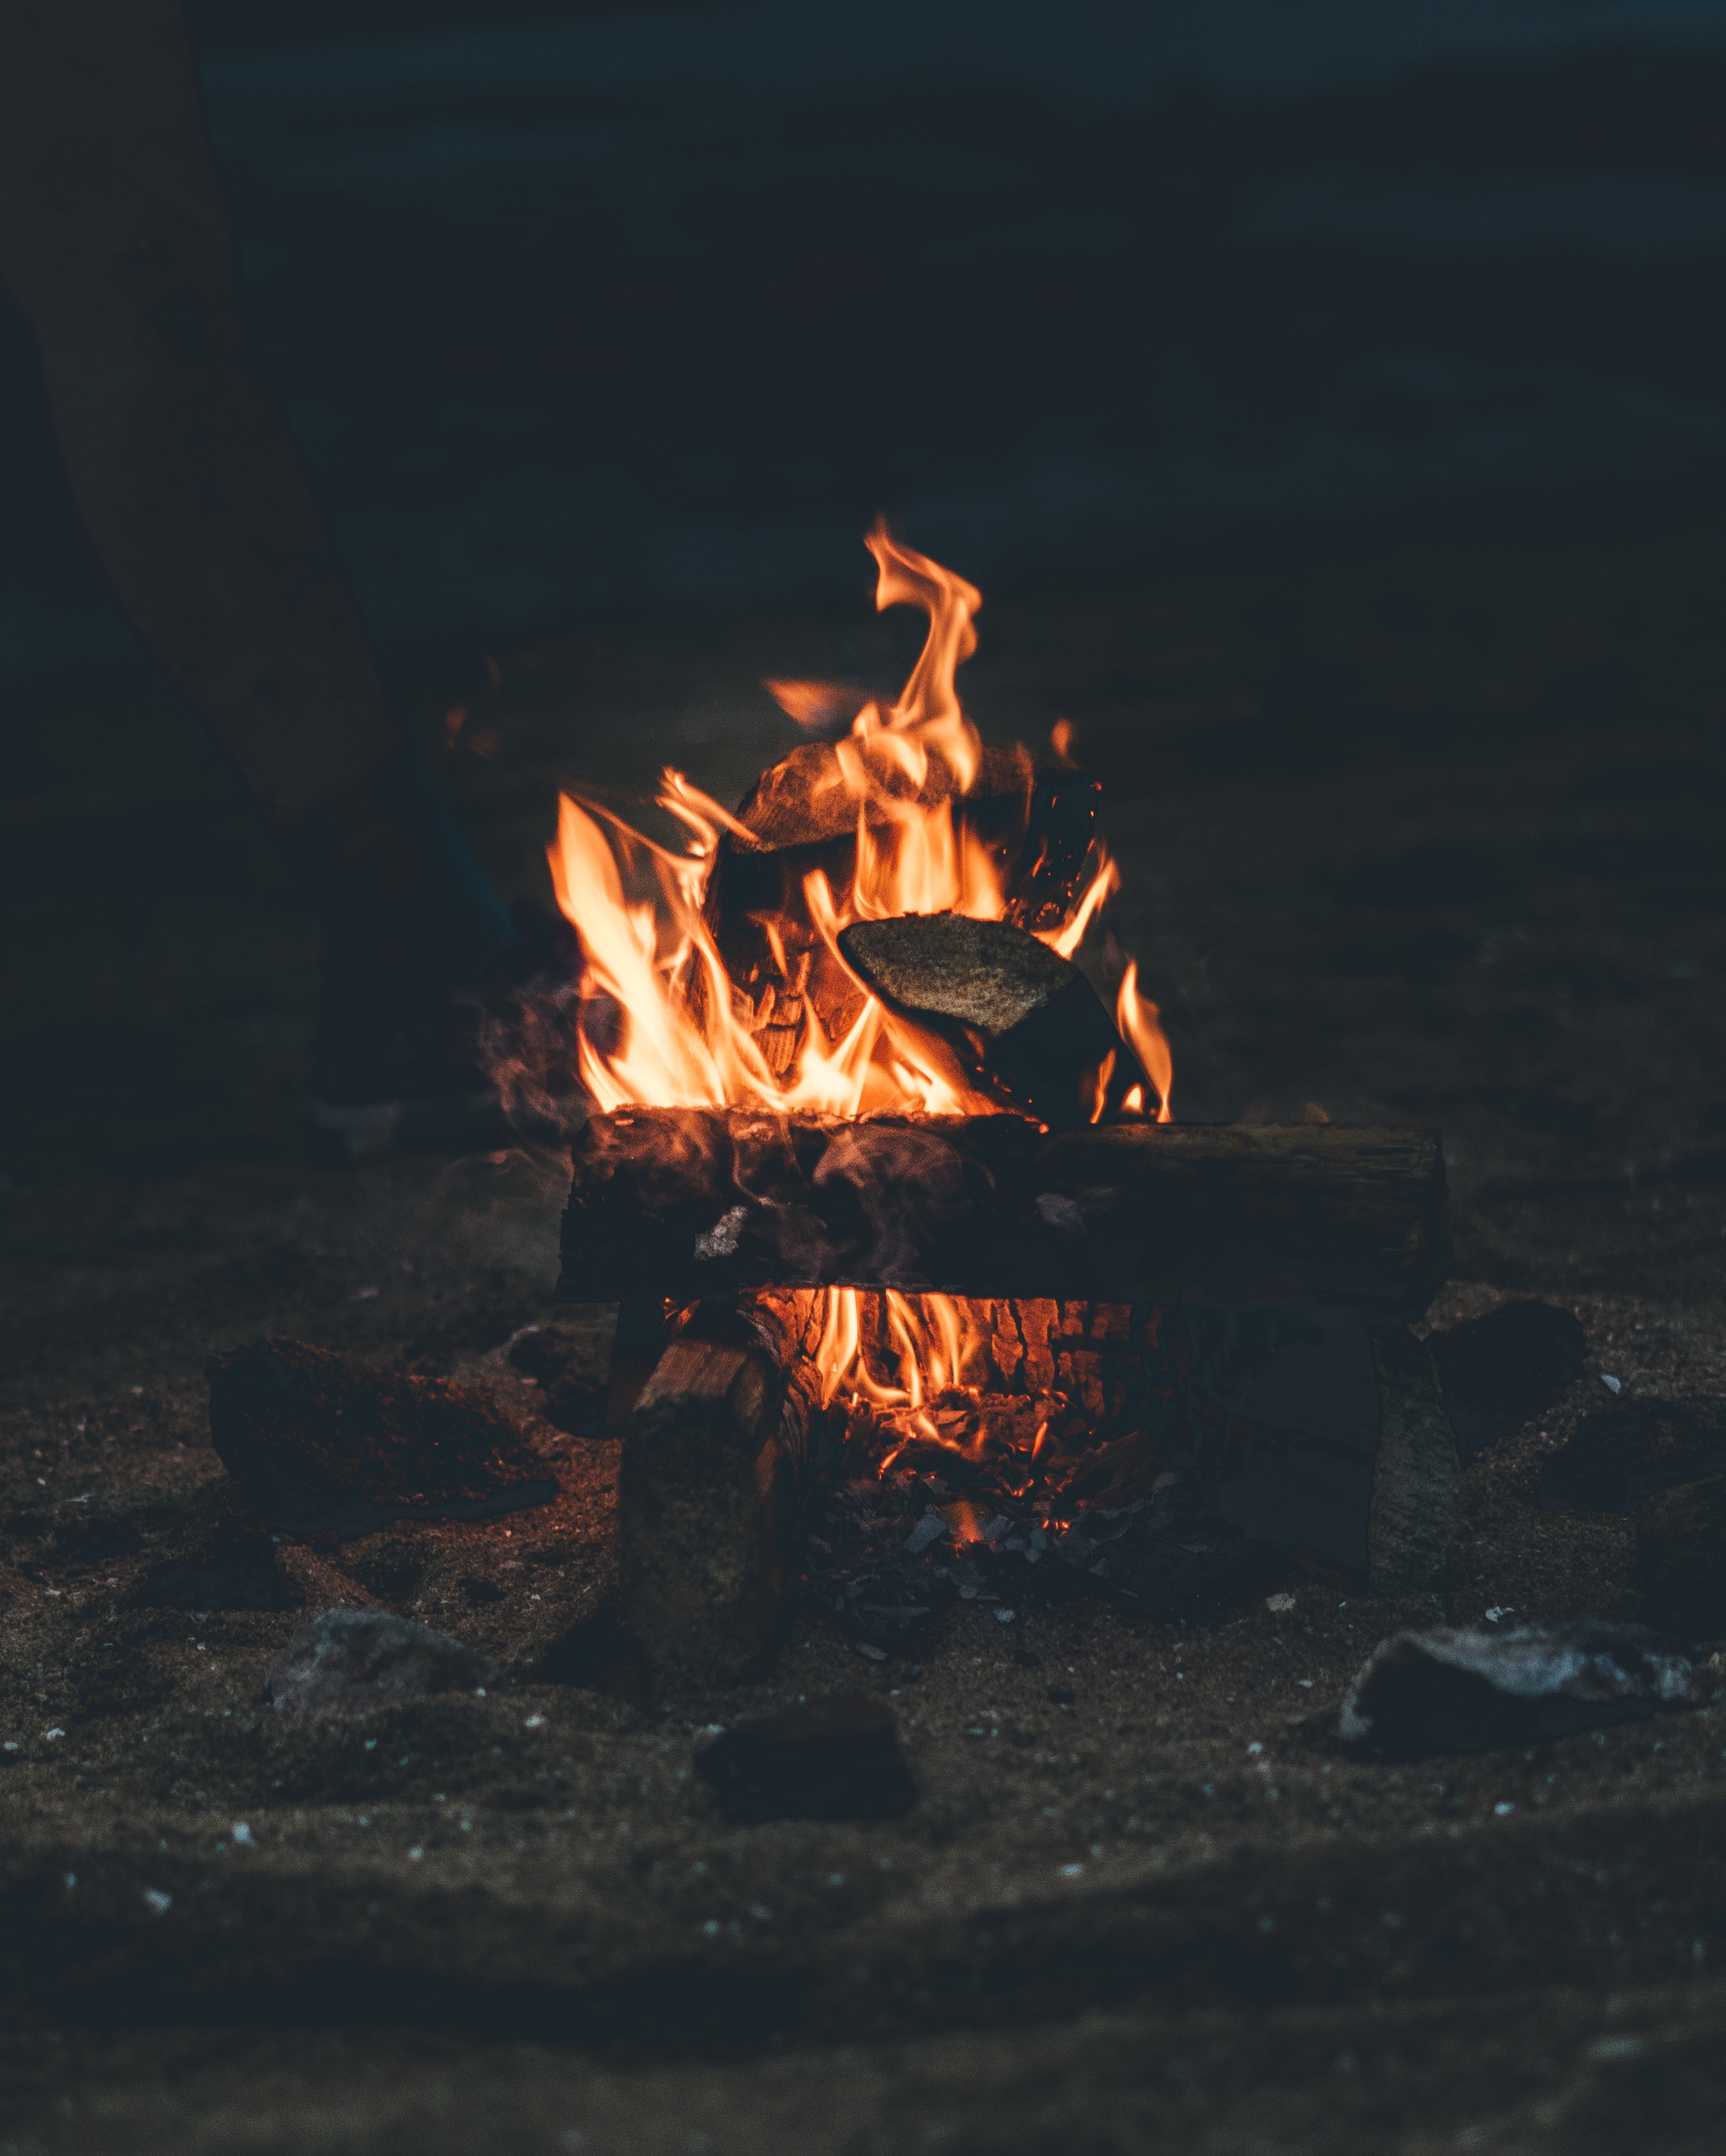 Free HD firewood, bonfire, camping, miscellaneous, campsite, fire, night, miscellanea